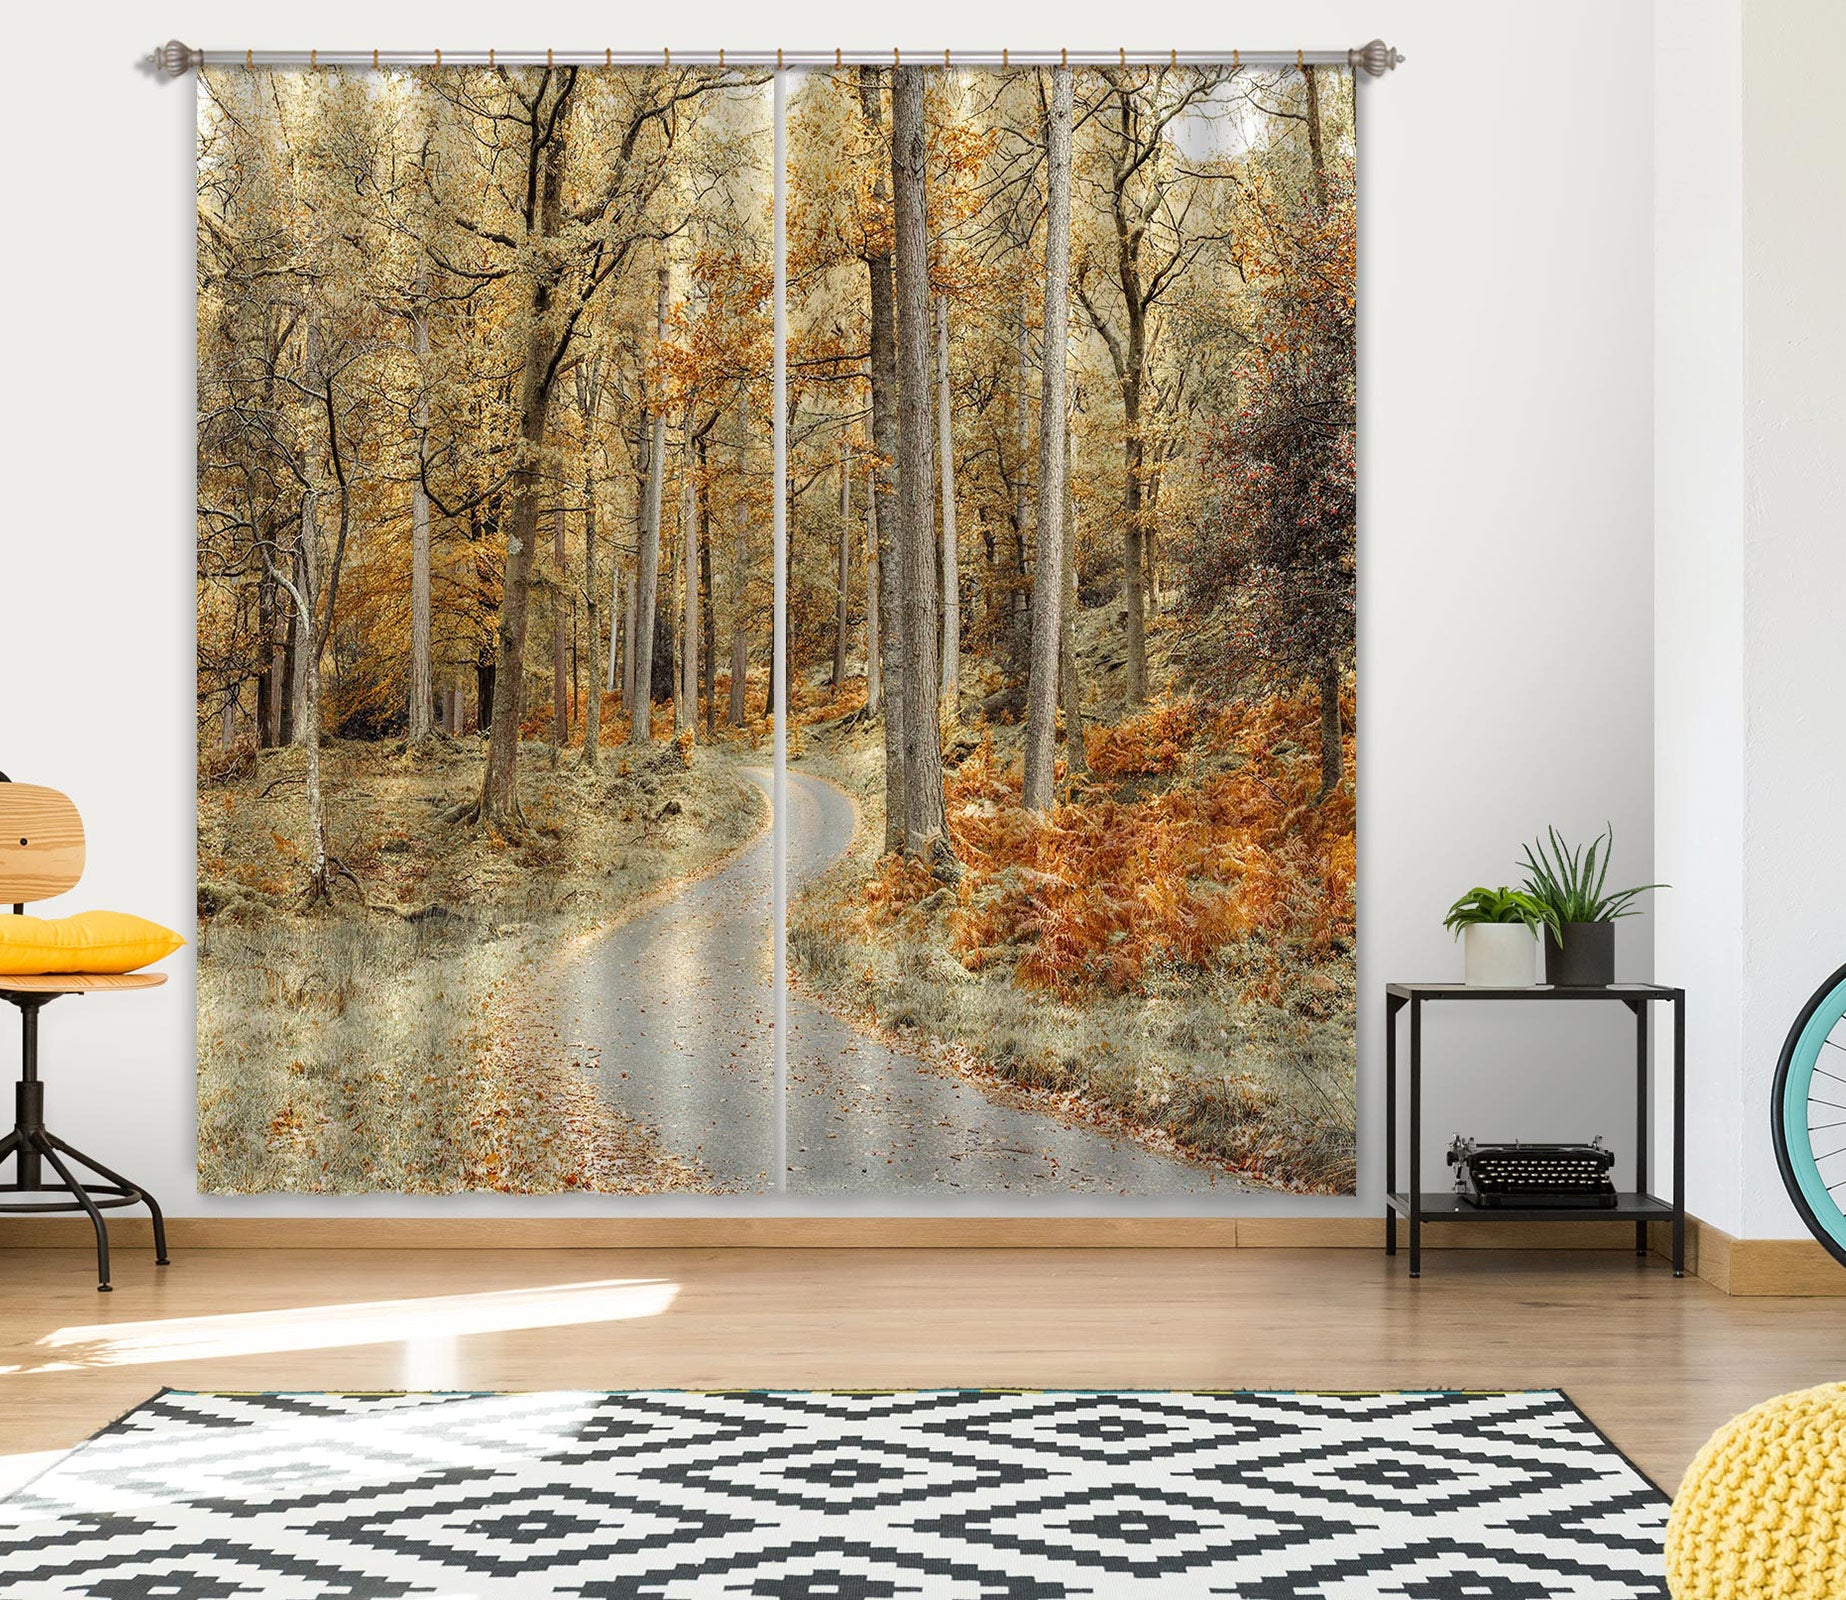 3D Forest Road 067 Assaf Frank Curtain Curtains Drapes